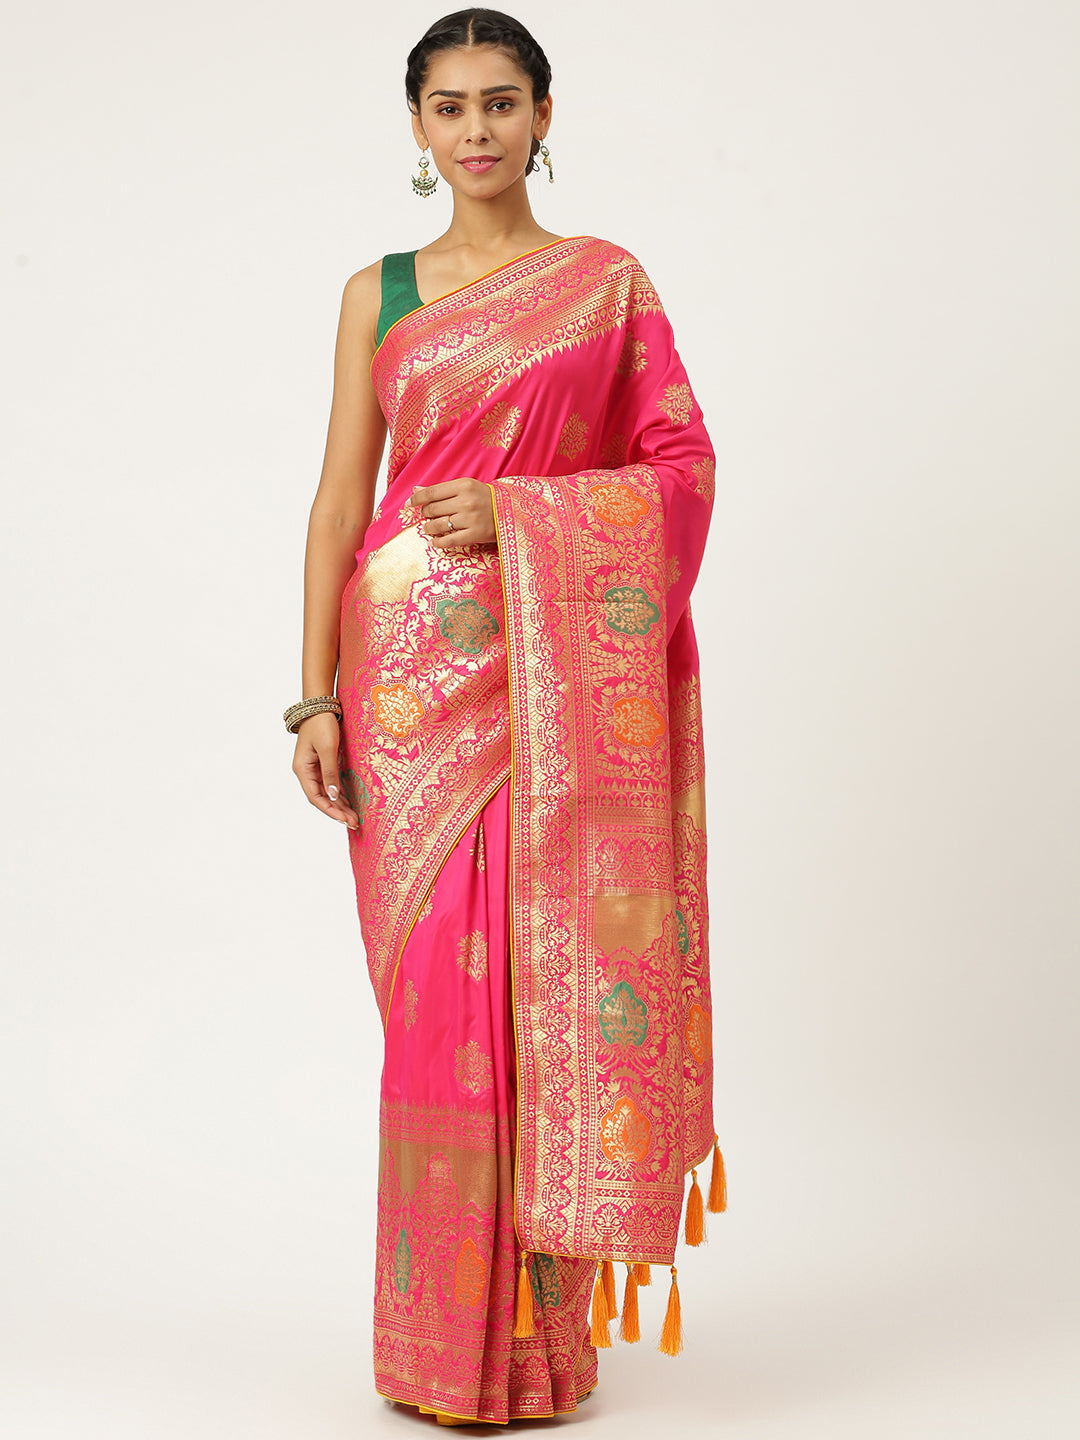 Buy the amazing Rani pink designer banarasi saree - Karagiri